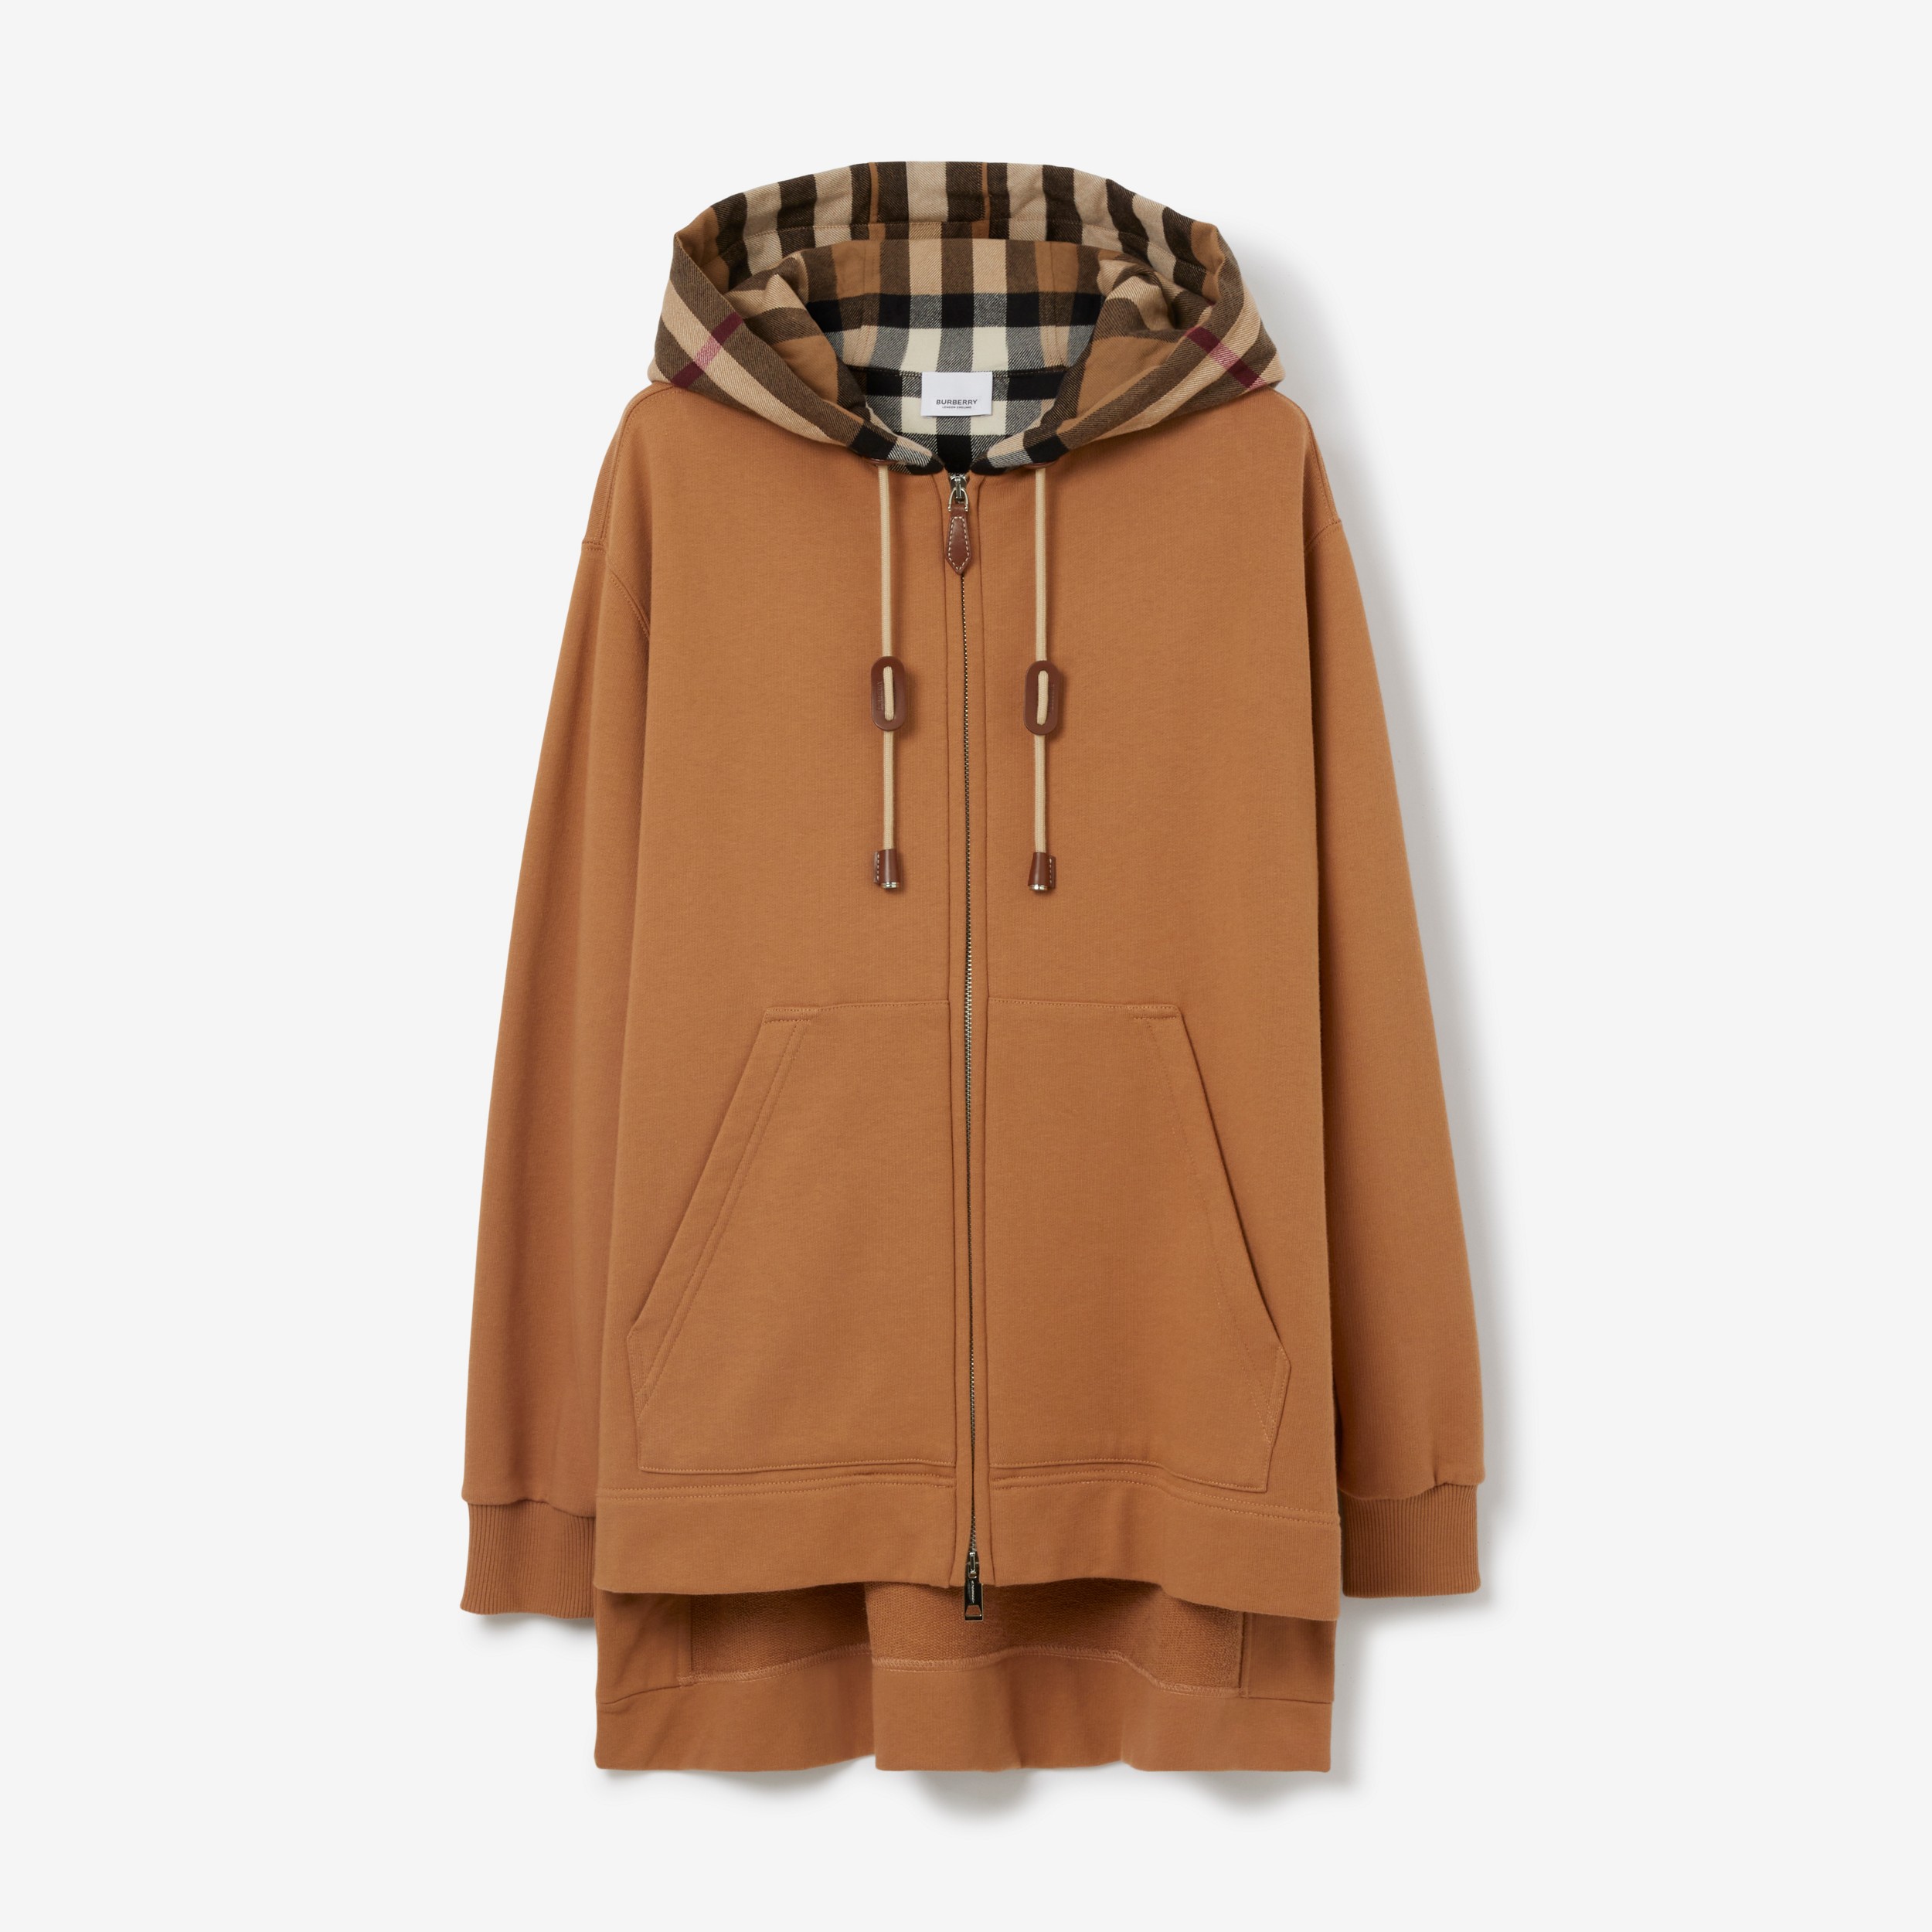 Oversize-Jacke aus Baumwolle mit Check-Kapuze (Camelfarben) - Damen | Burberry® - 1